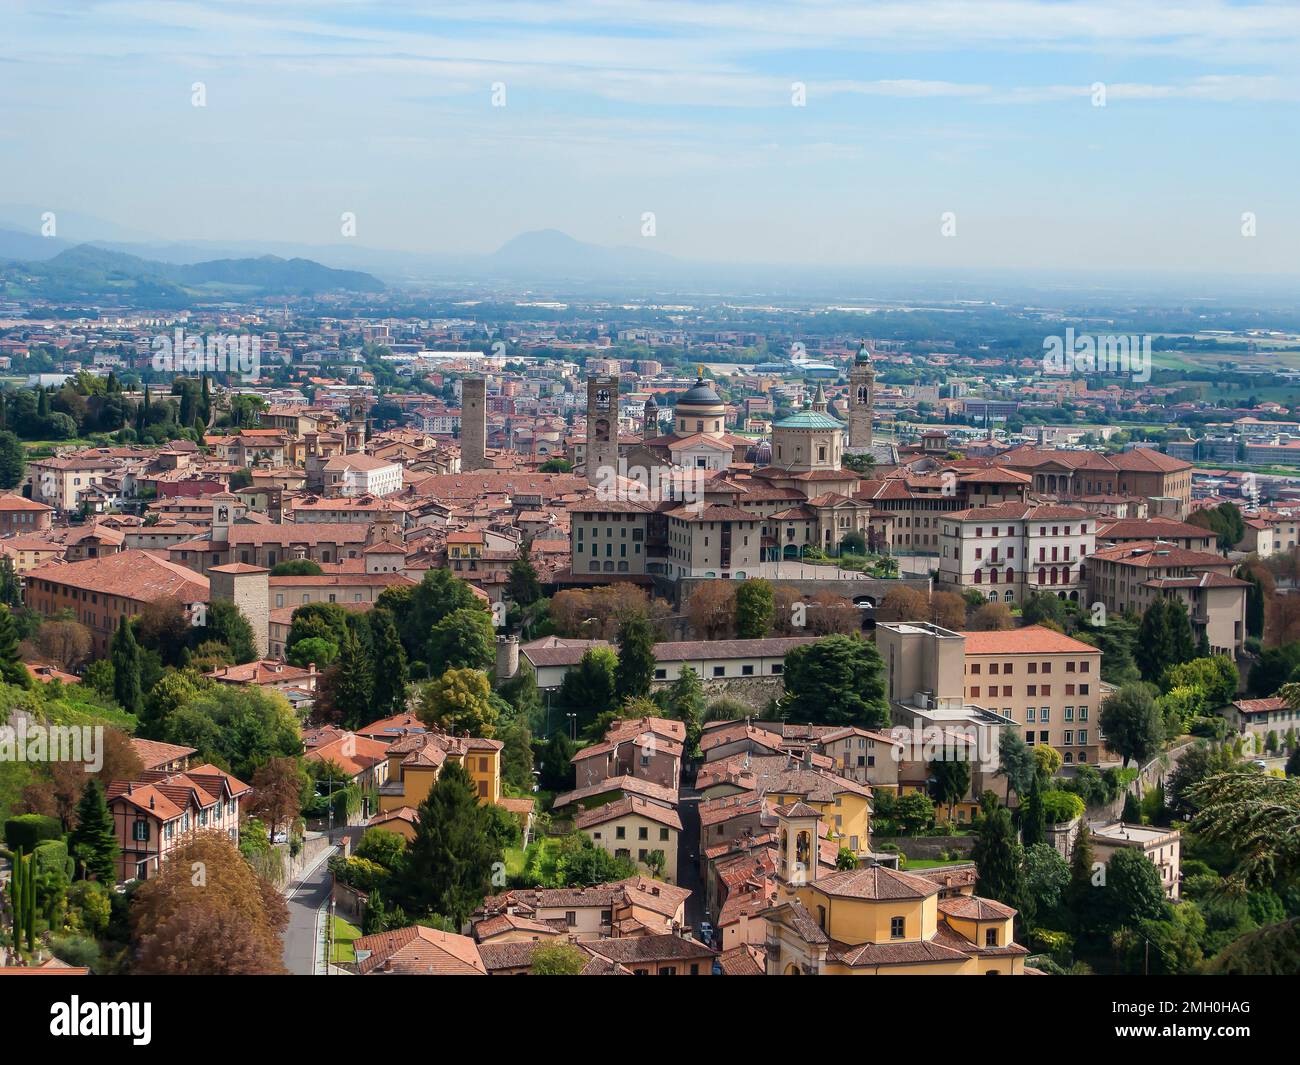 Panoramablick auf die Altstadt, Apenninen und die Padan-Ebene vom Hügel San Vigilio, Bergamo, Italien Stockfoto